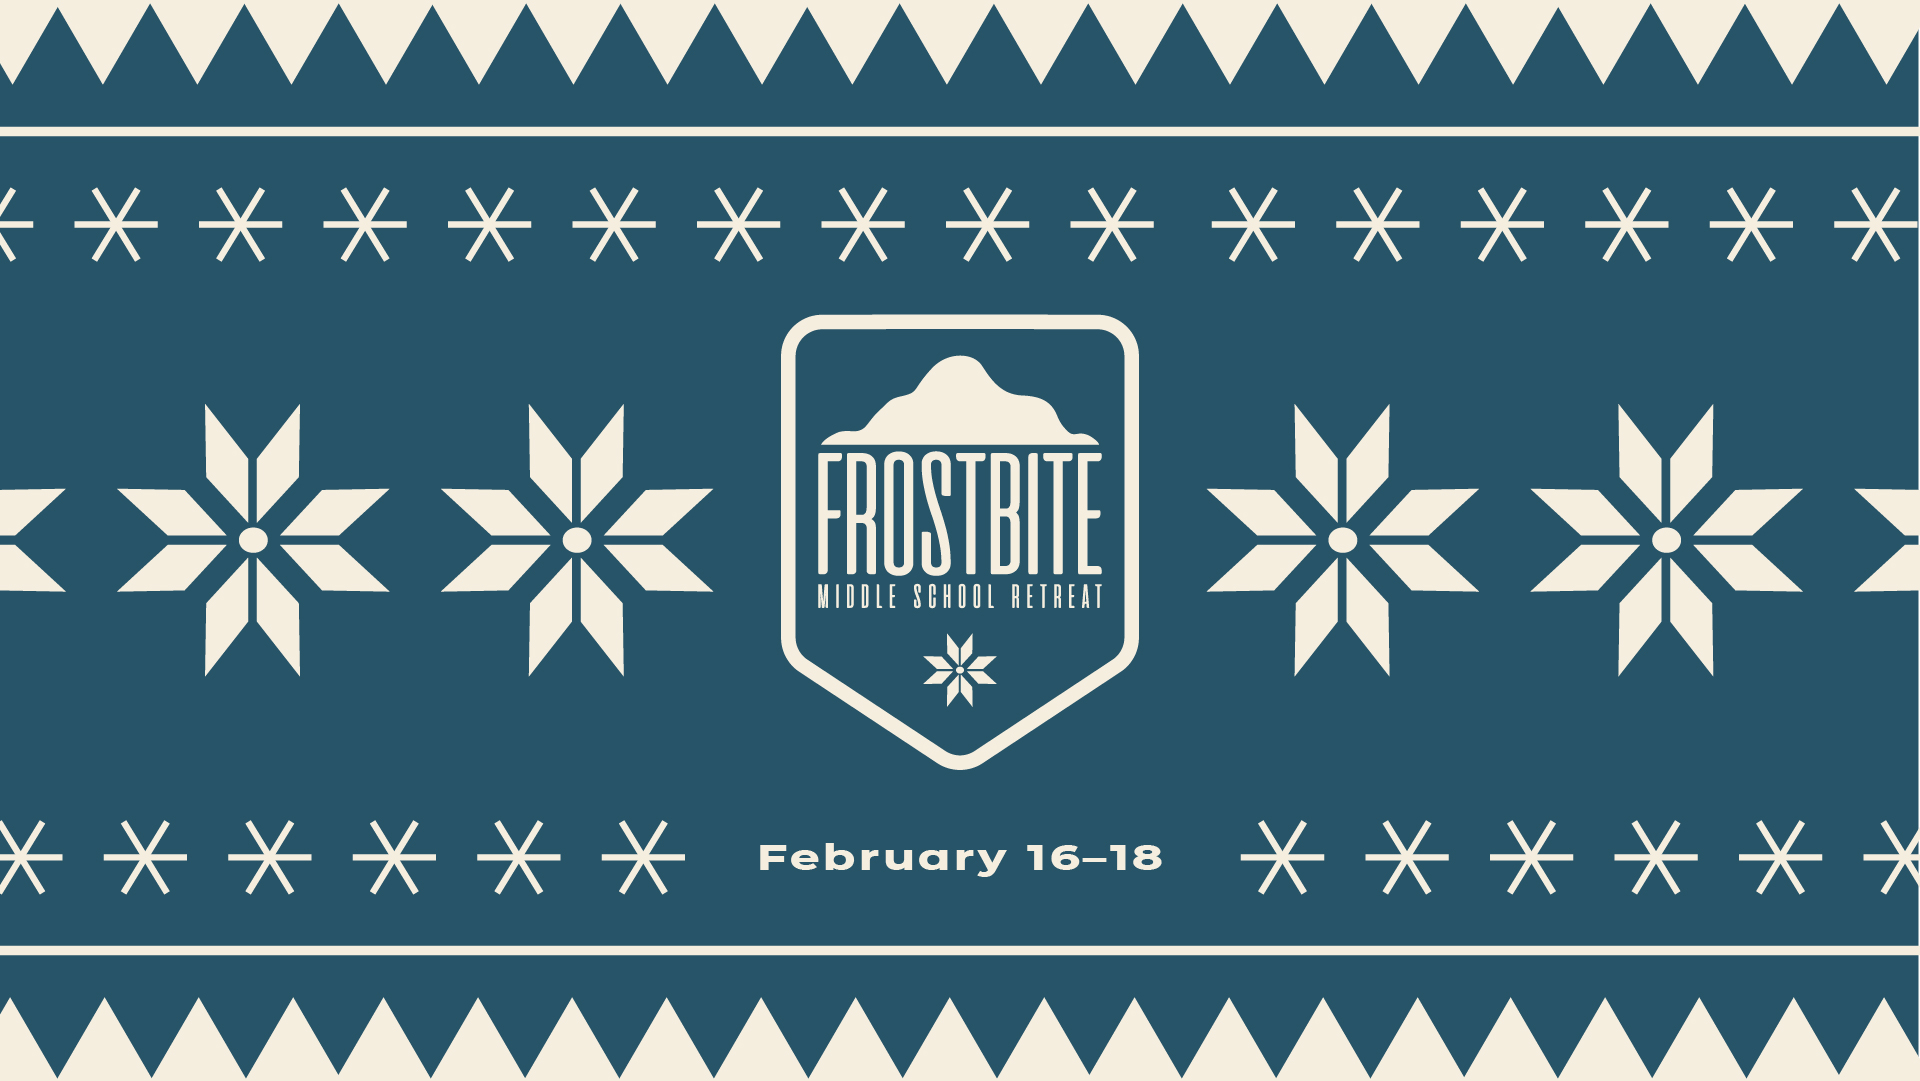 Frostbite Middle School Retreat